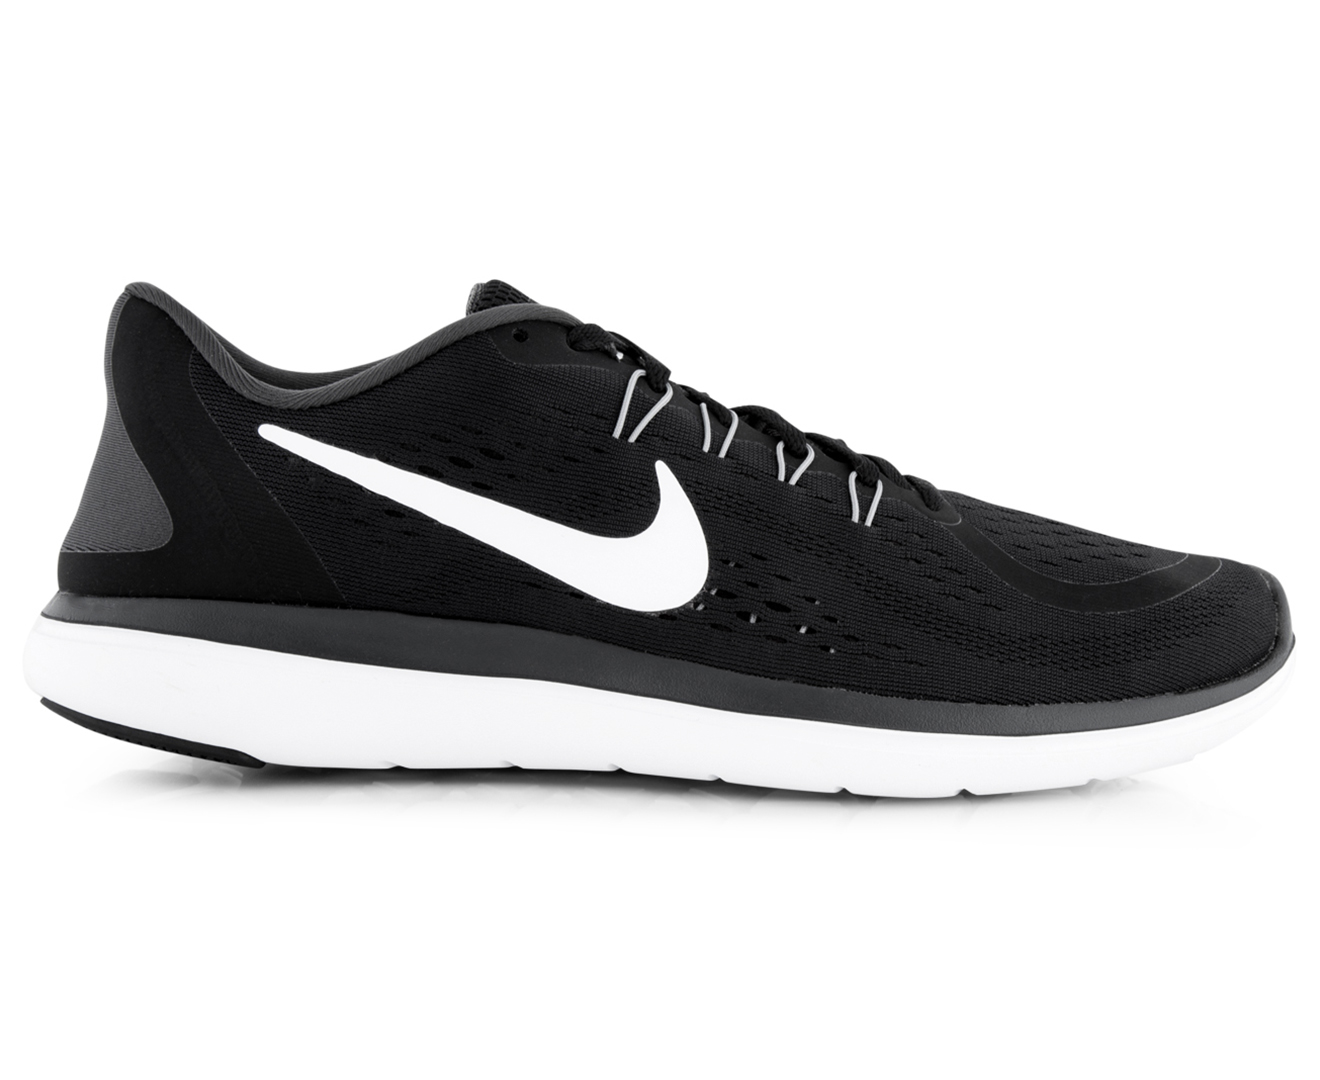 Nike Men's Flex 2017 RN Shoe - Black/White | Catch.co.nz